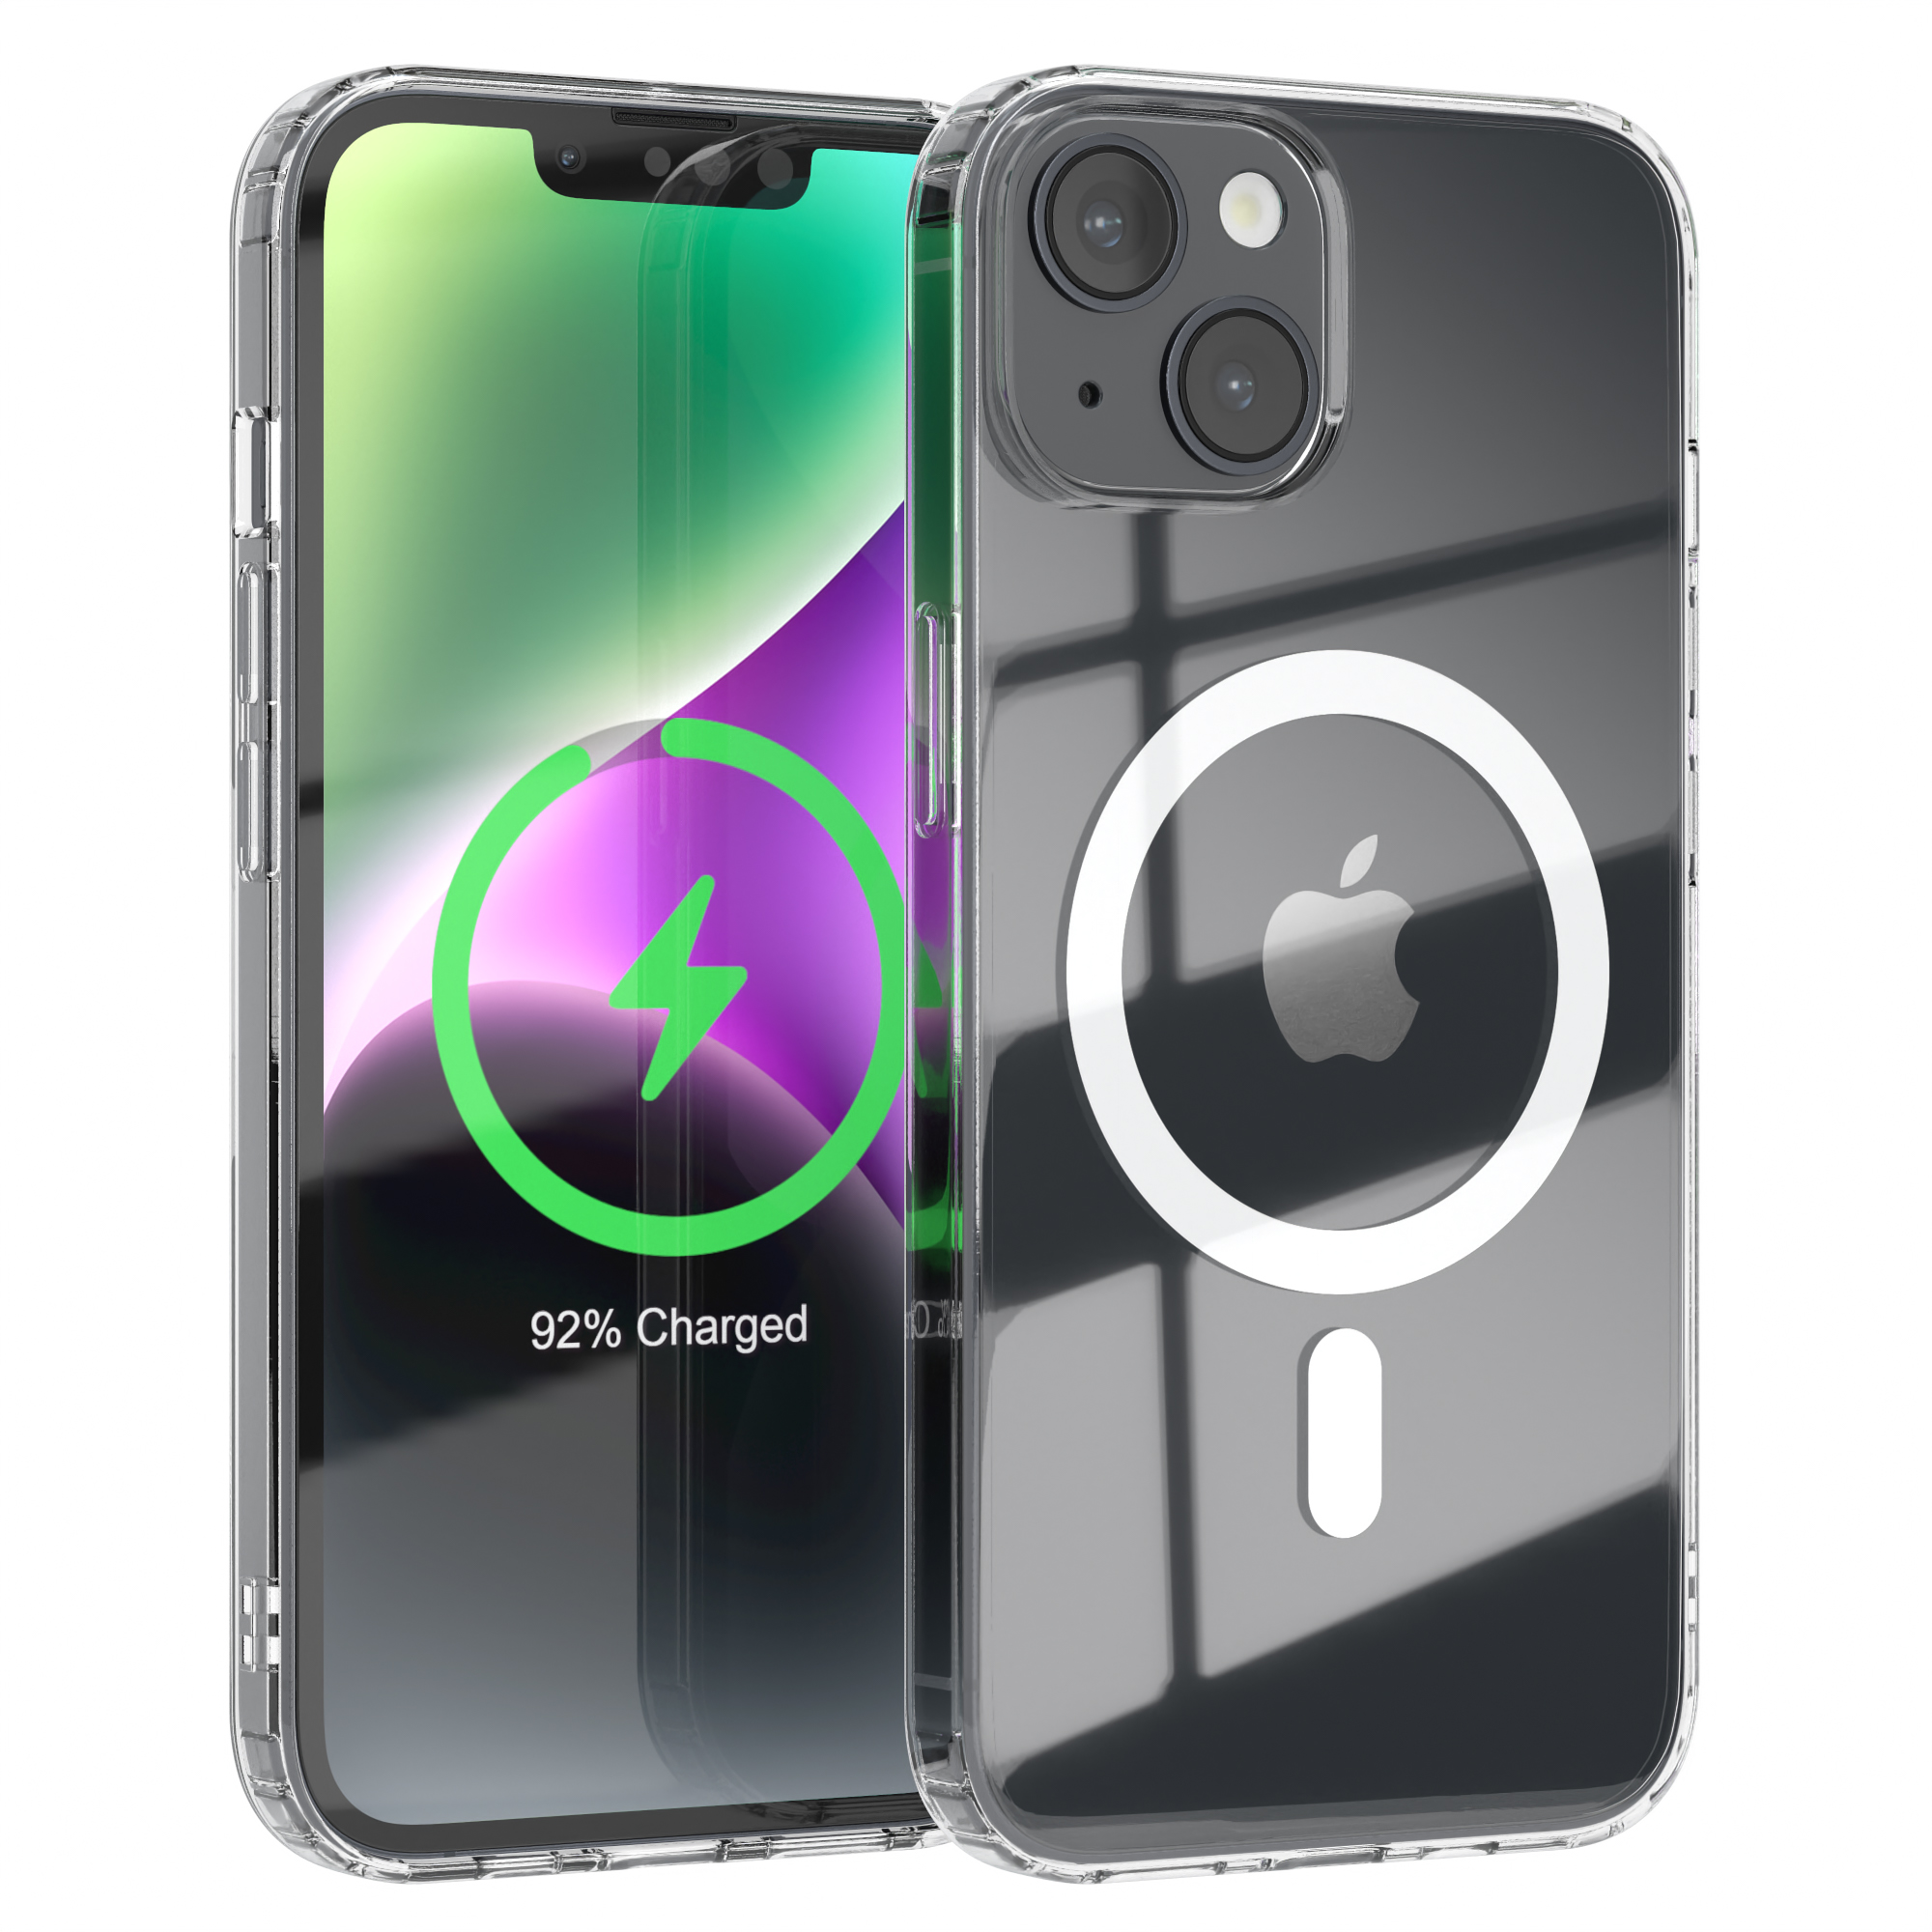 EAZY CASE 14, Klar iPhone MagSafe, Apple, Durchsichtig / Clear Cover mit Bumper